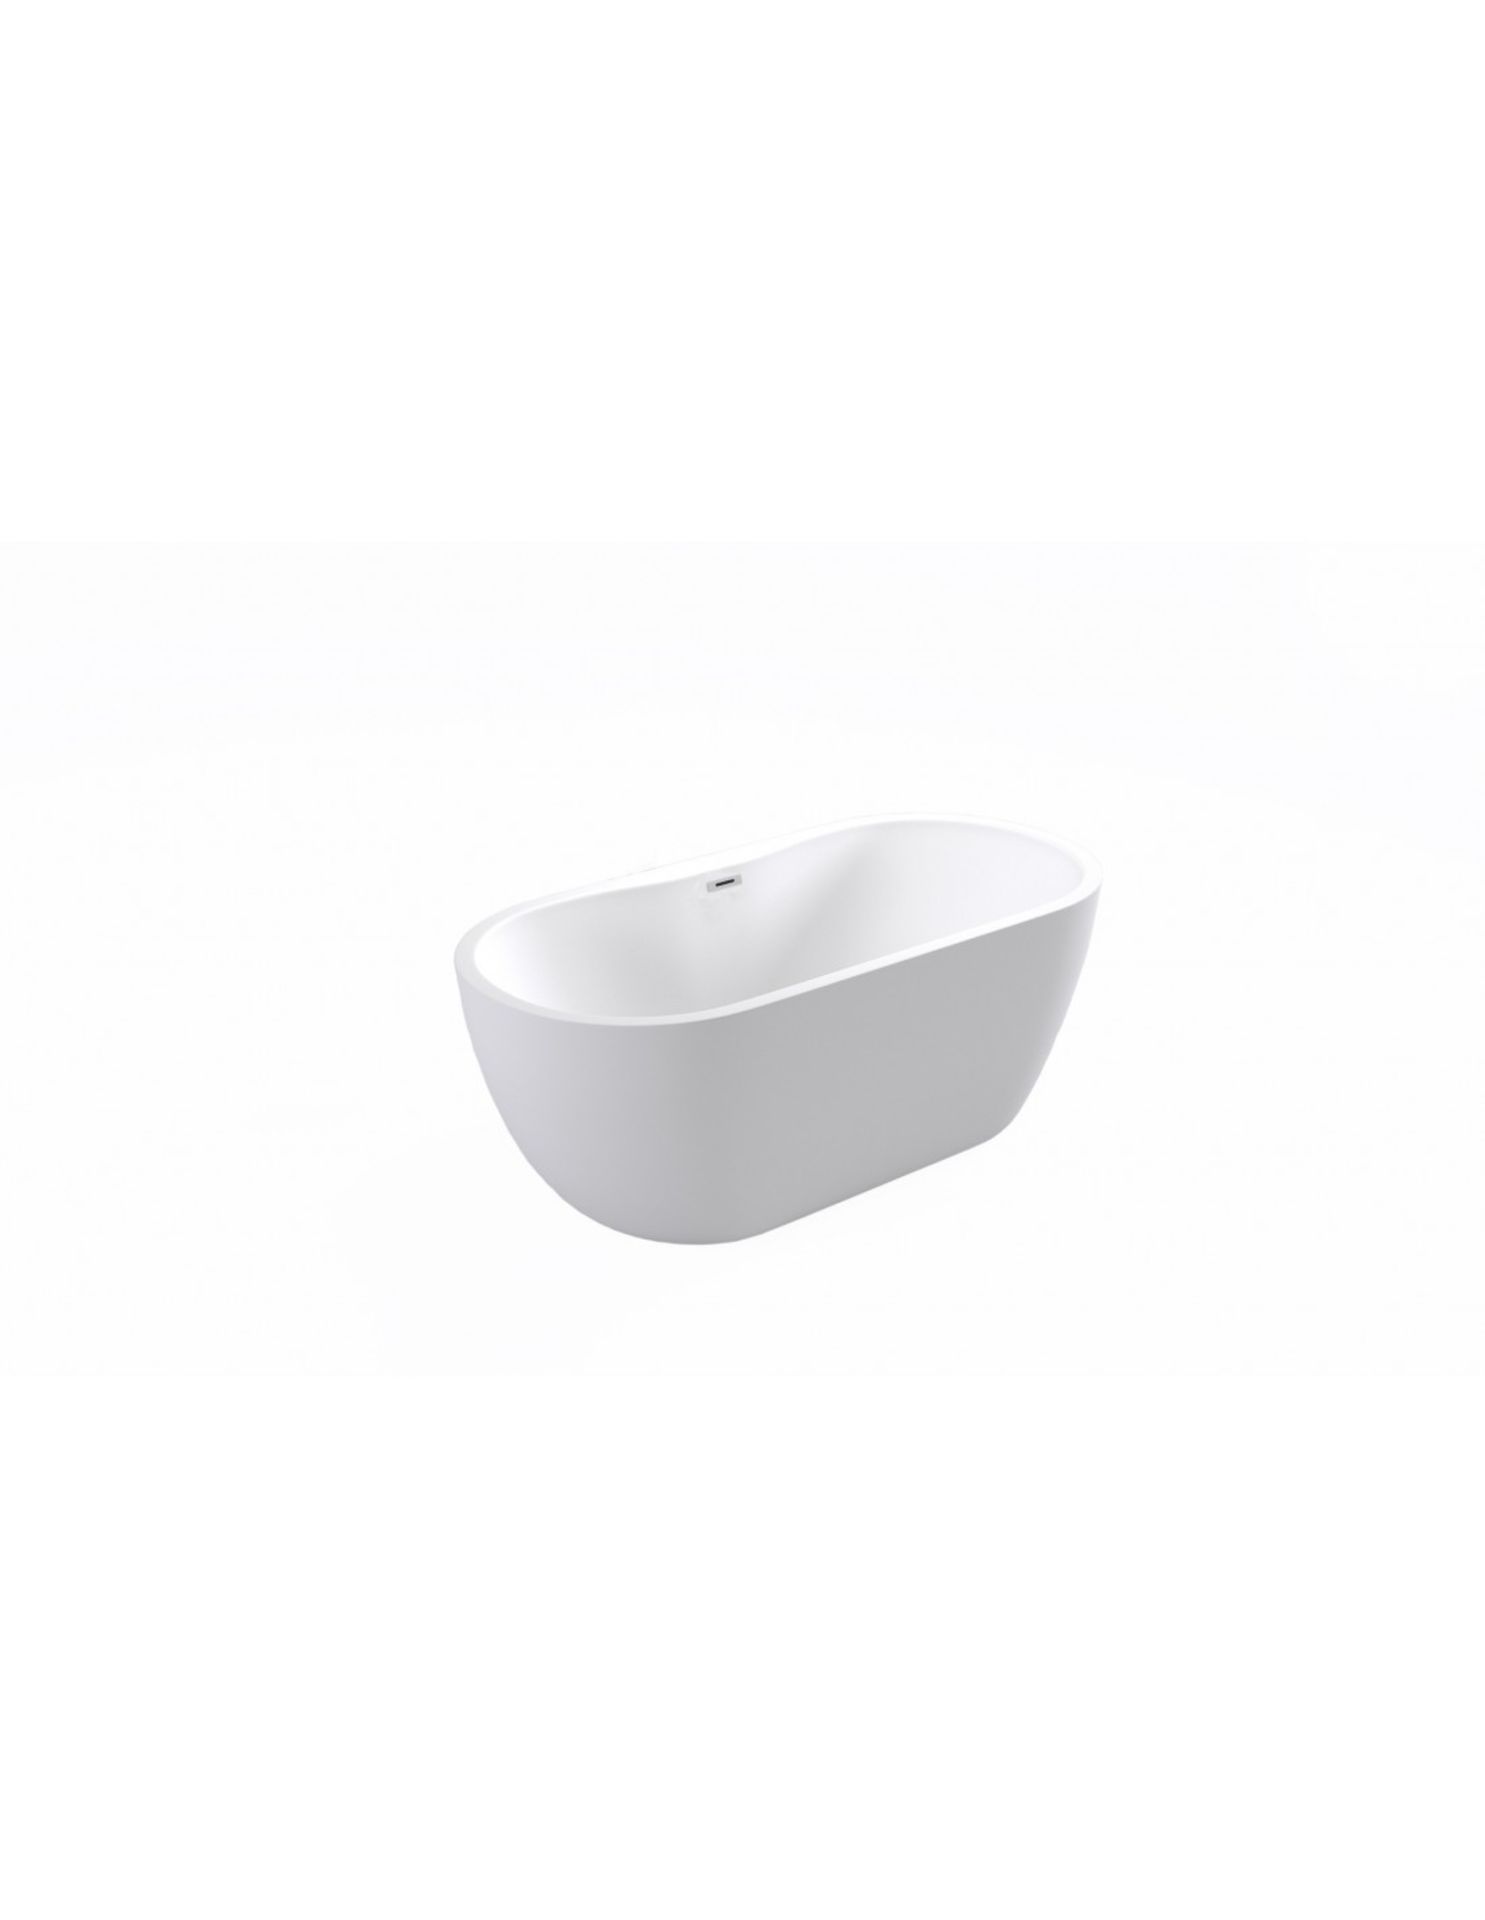 New (G9) 1455x740mm Harlesden White Freestanding Bath. Ex Display. A Luxury Elegant Double En... - Image 2 of 2